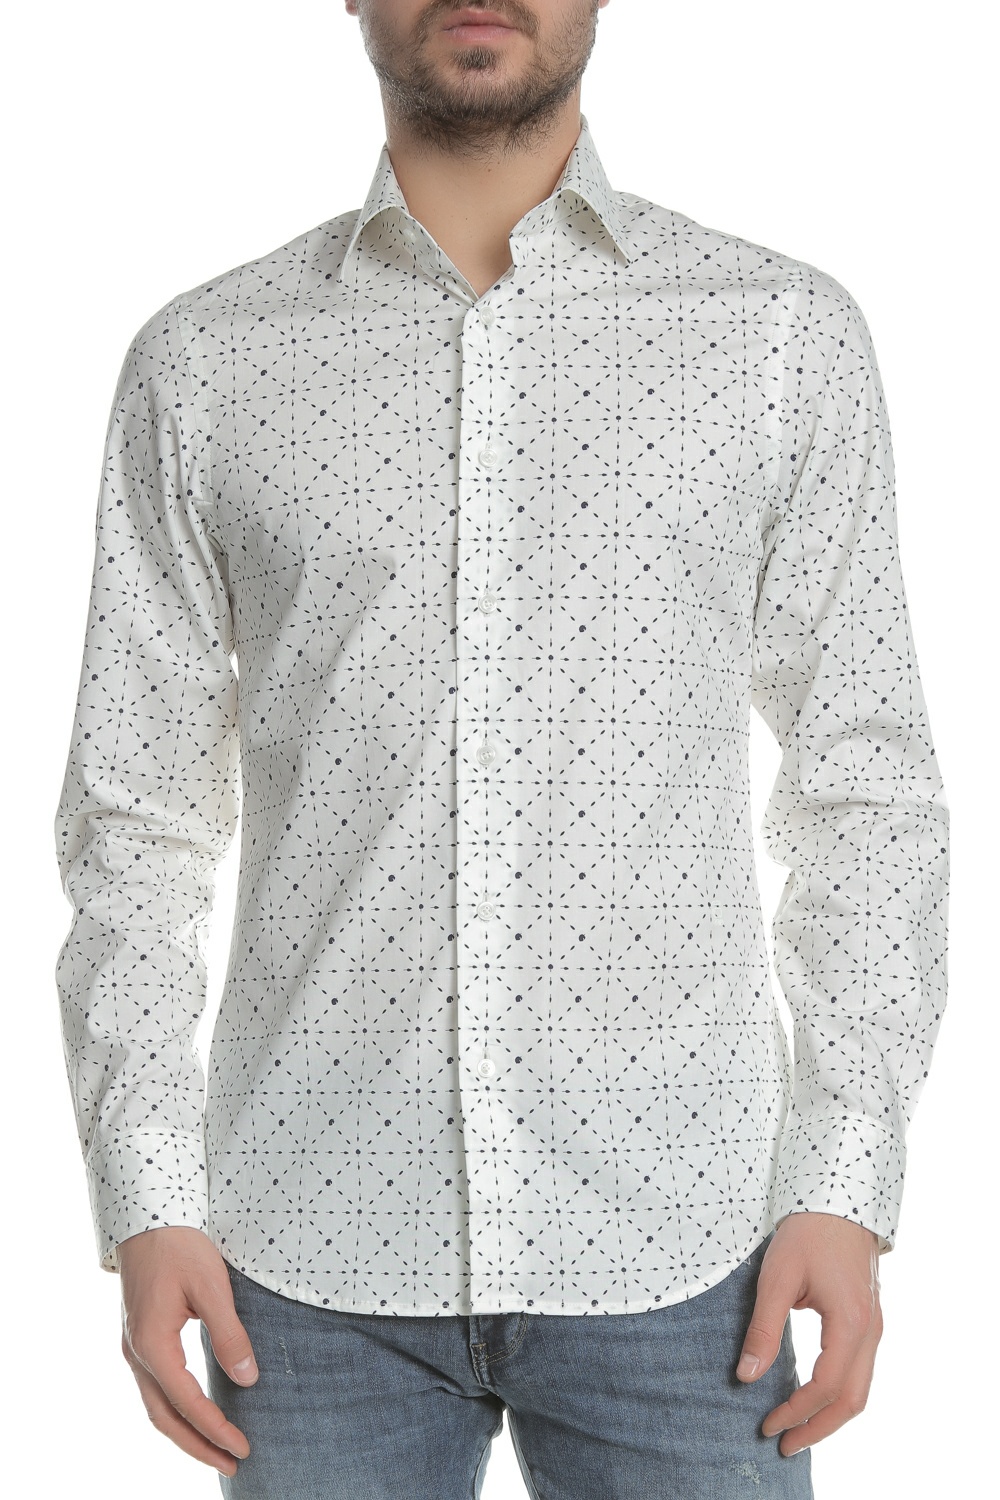 G-STAR RAW G-STAR - Ανδρικό μακρυμάνικο πουκάμισο G-STAR RAW CORE SHIRT λευκό